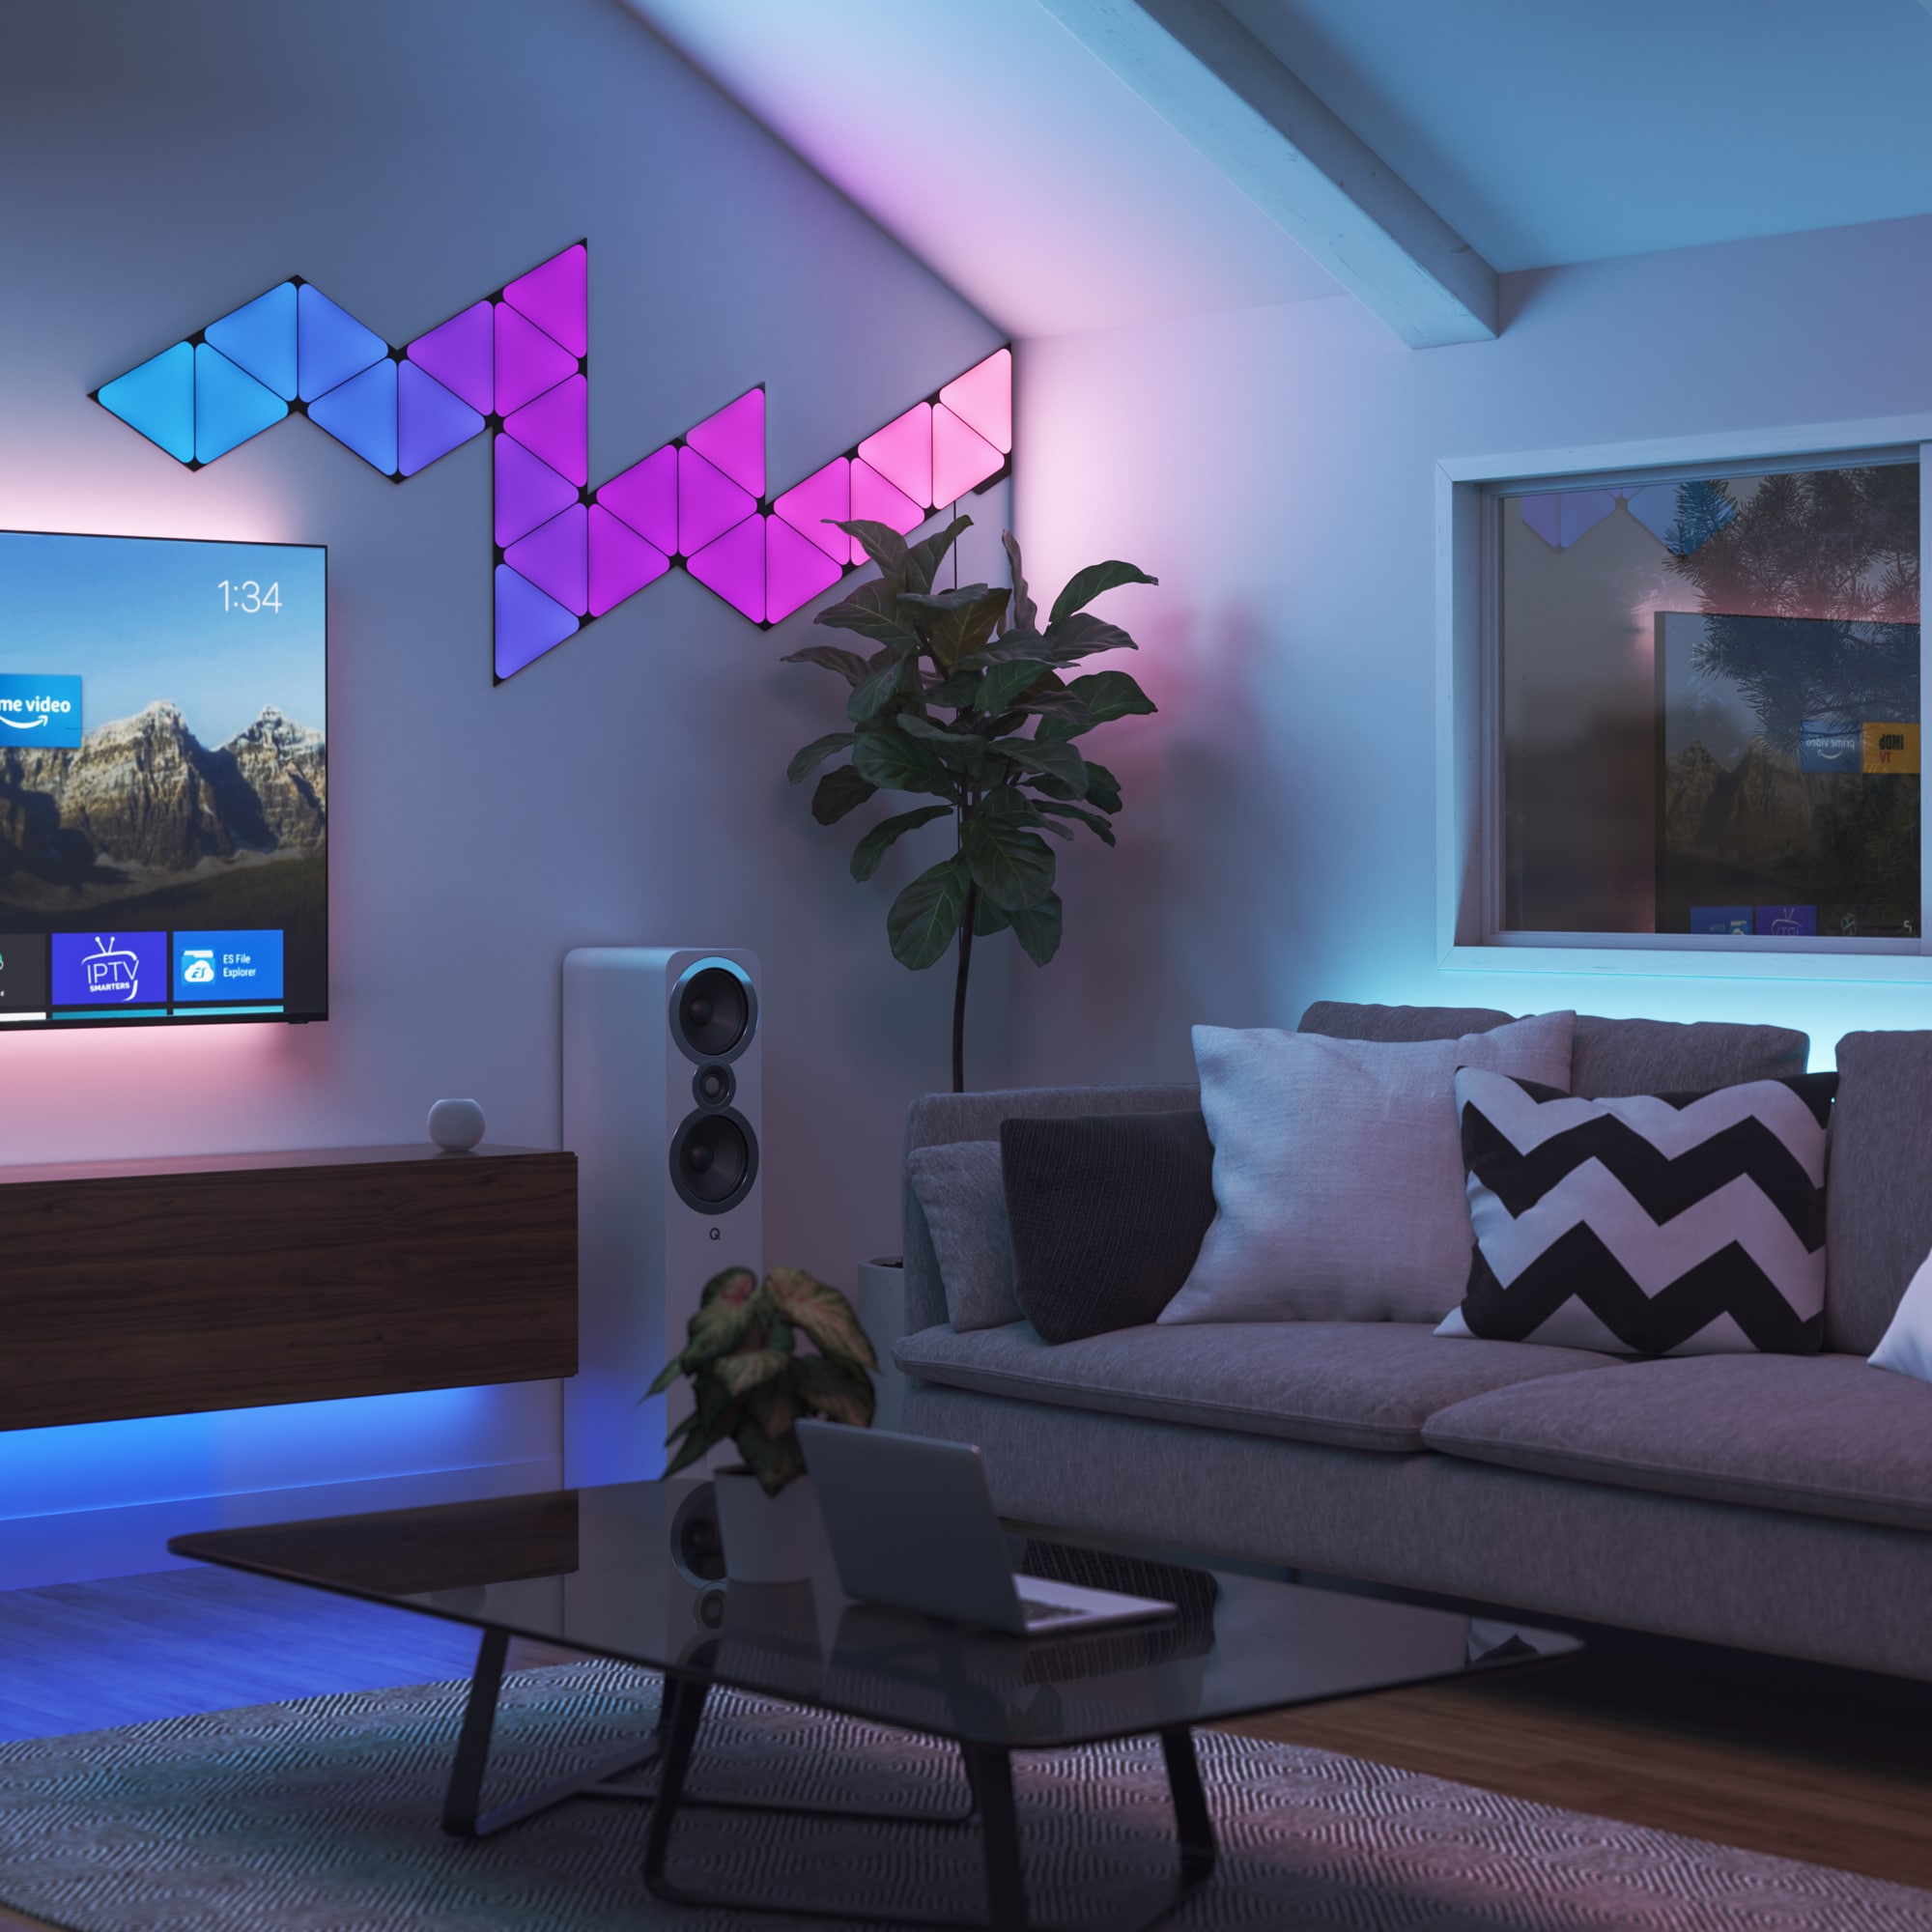 Blue, pink and purple Nanoleaf Nanoleaf light panels synchronized with music in a living room